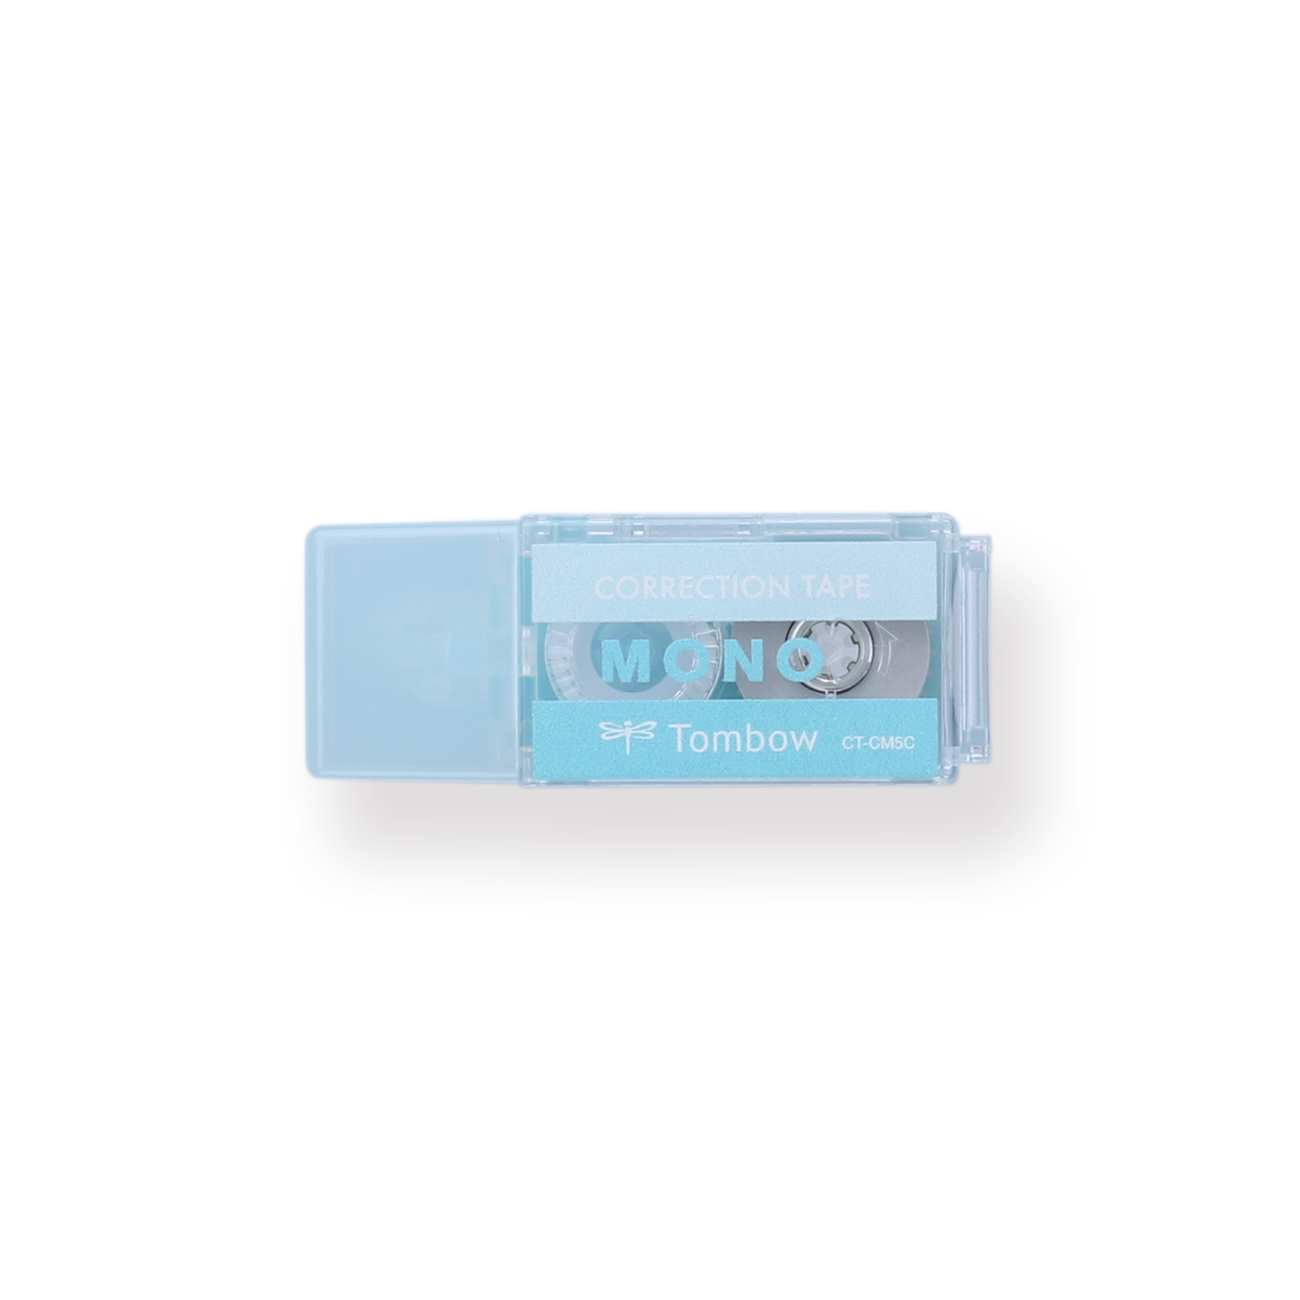 Tombow MONO Correction Tape - Pocket Series - Blue - Stationery Pal